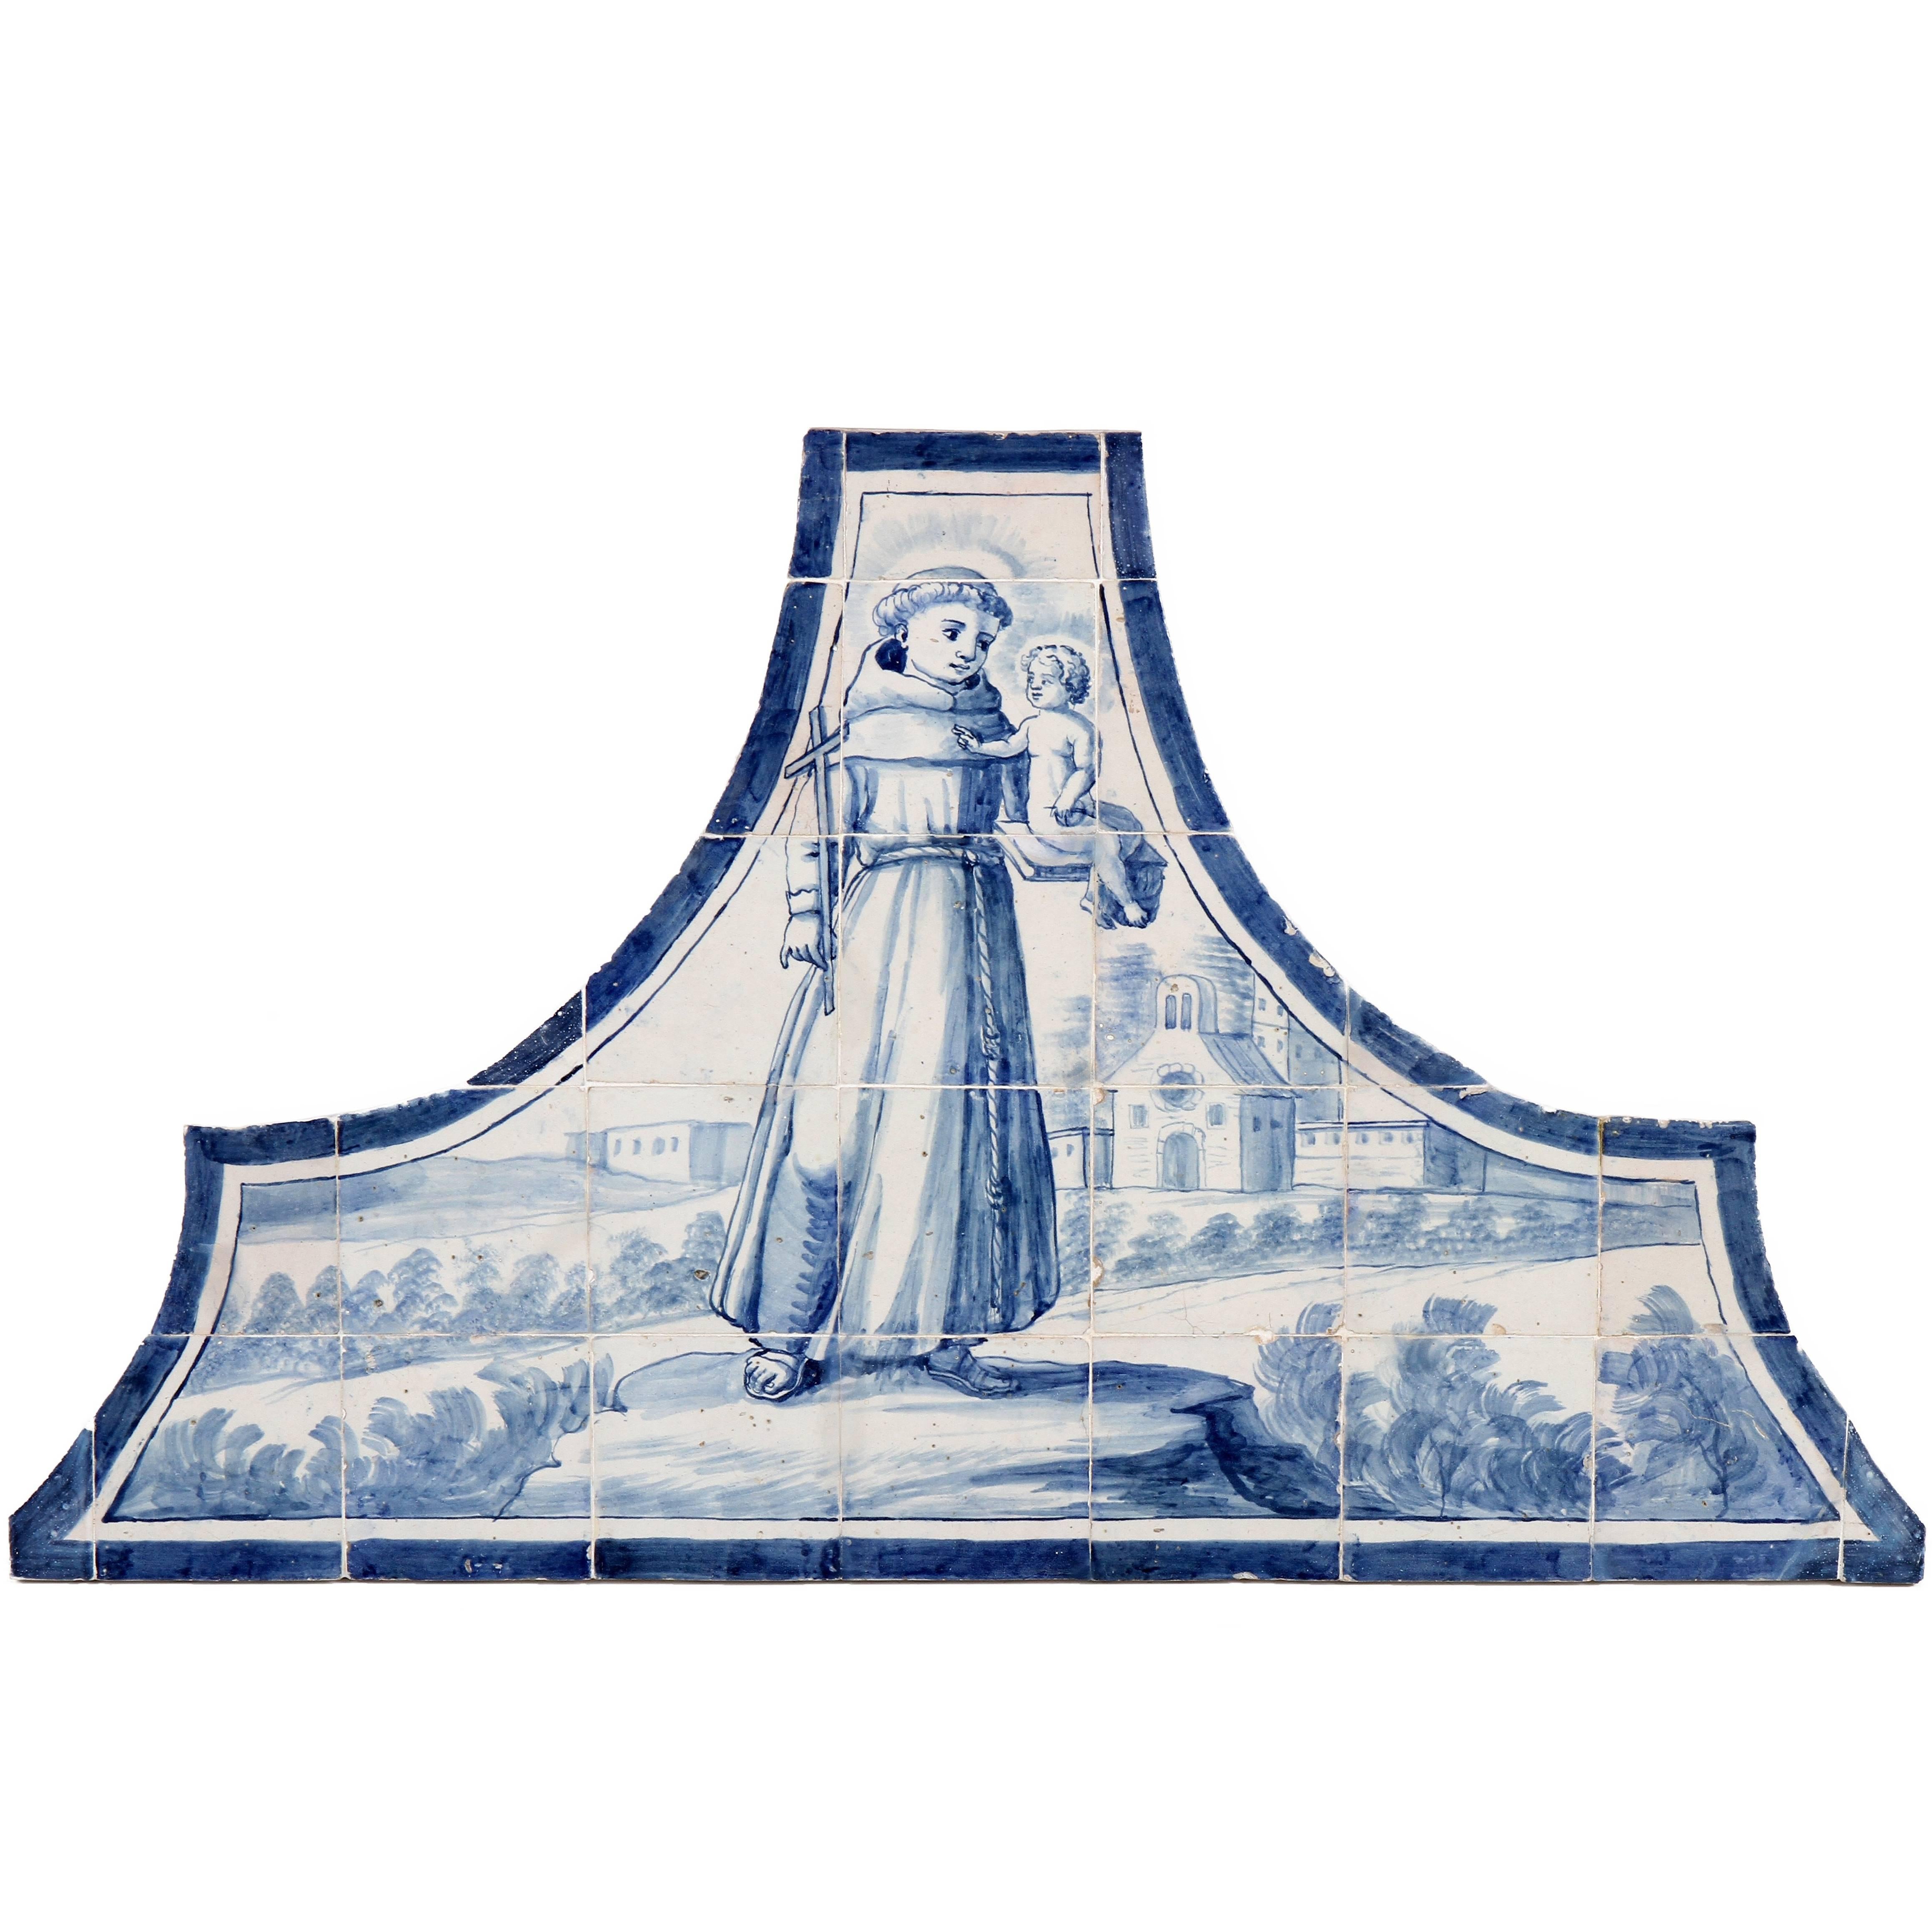 18th Century Tile Panel Representing "Santo António"